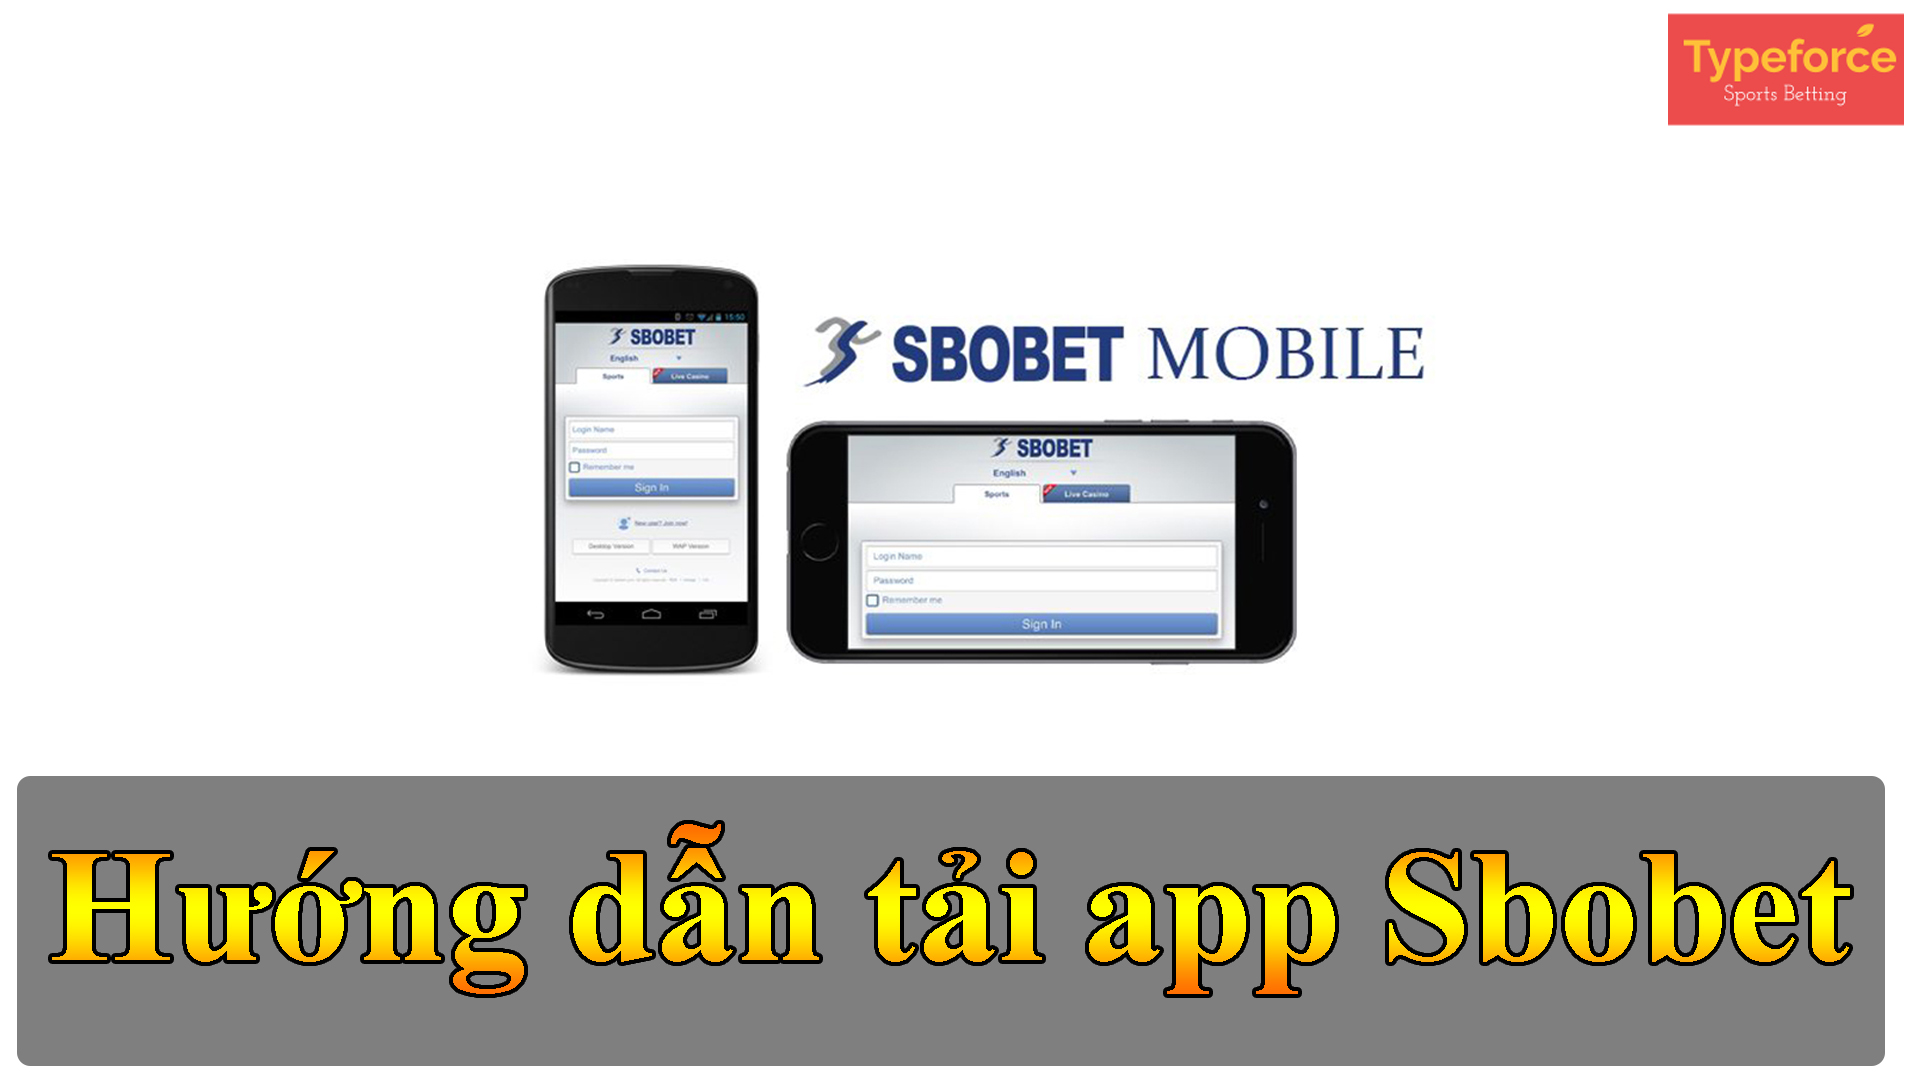 Hướng dẫn tải app Sbobet